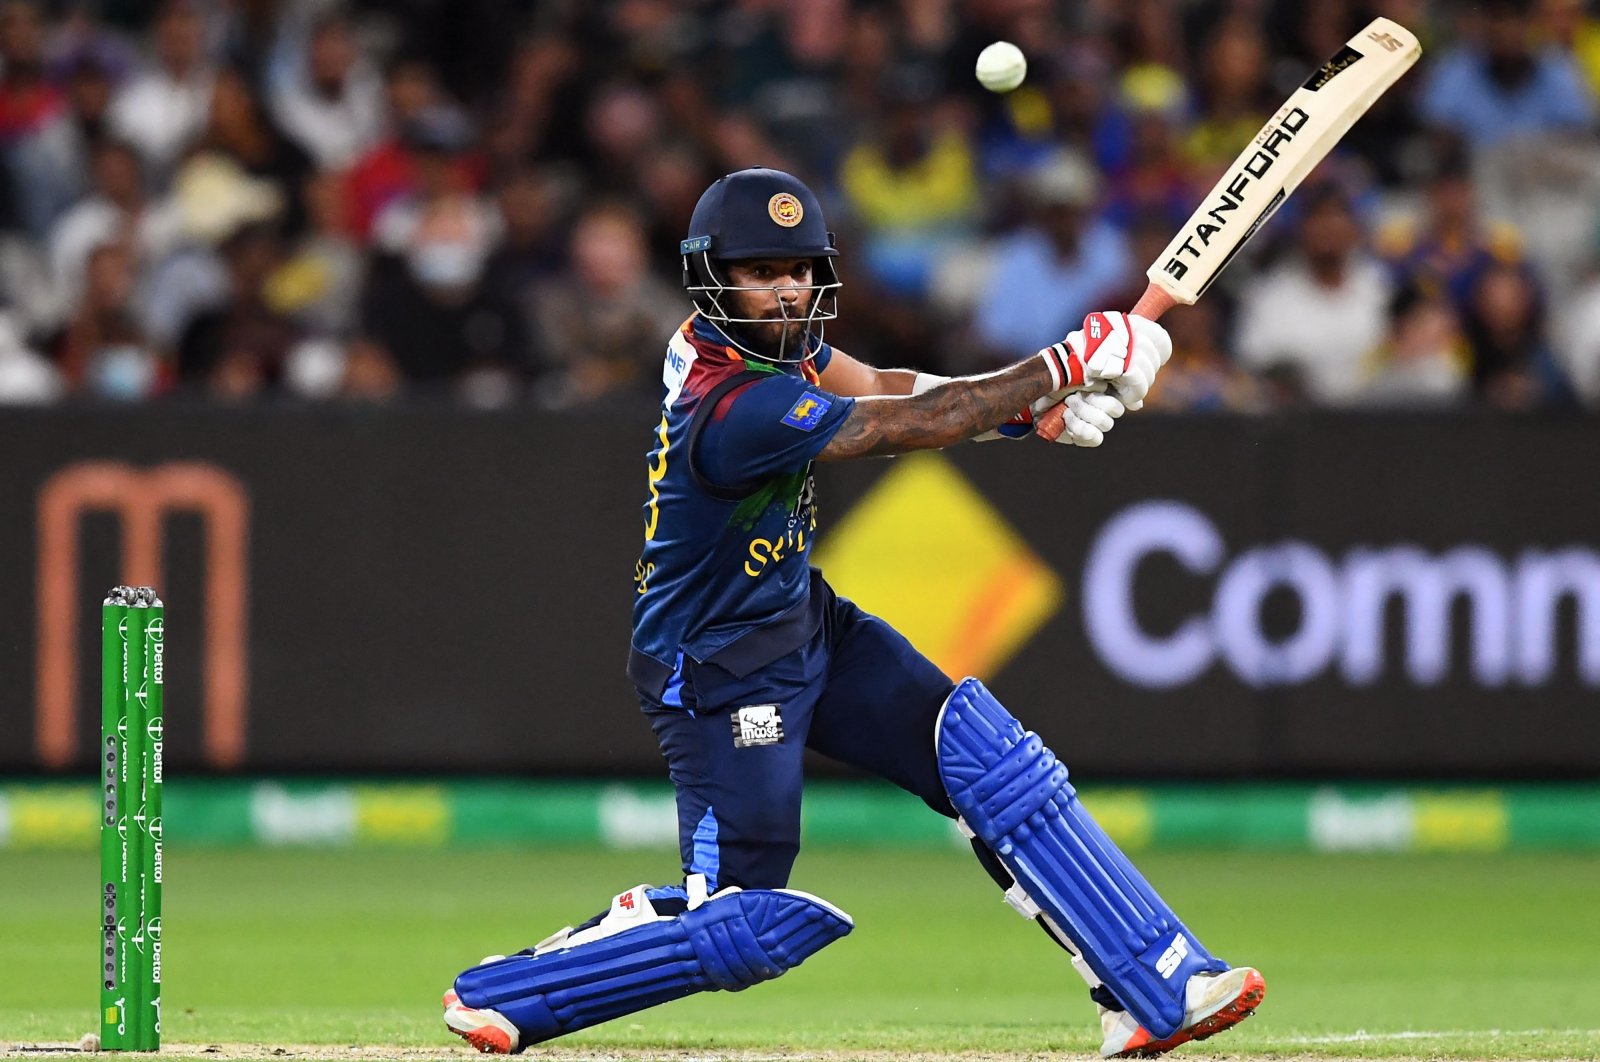 Sri Lanka batter Kusal Mendis in action against Australia in the fifth T20 match, Melbourne, Australia, Feb. 20, 2022. (AFP Photo)